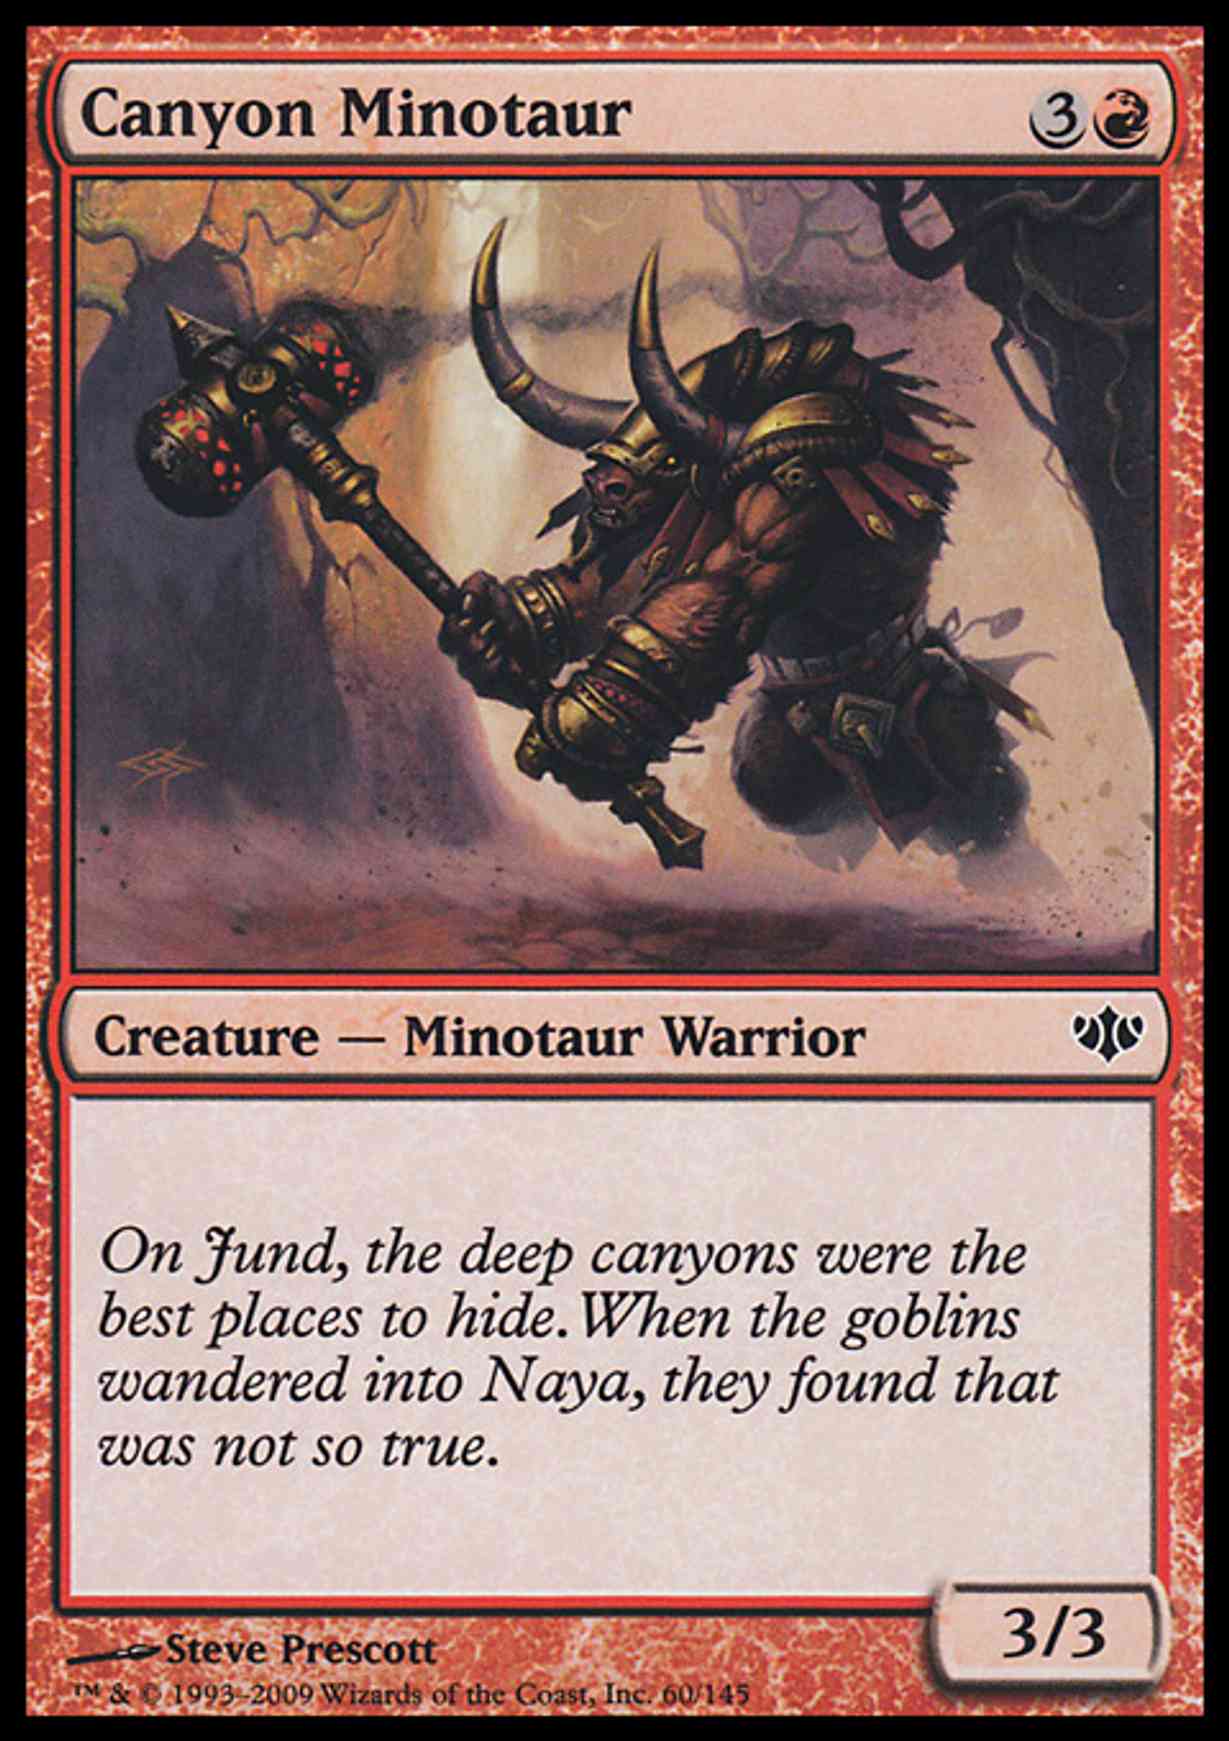 Canyon Minotaur magic card front